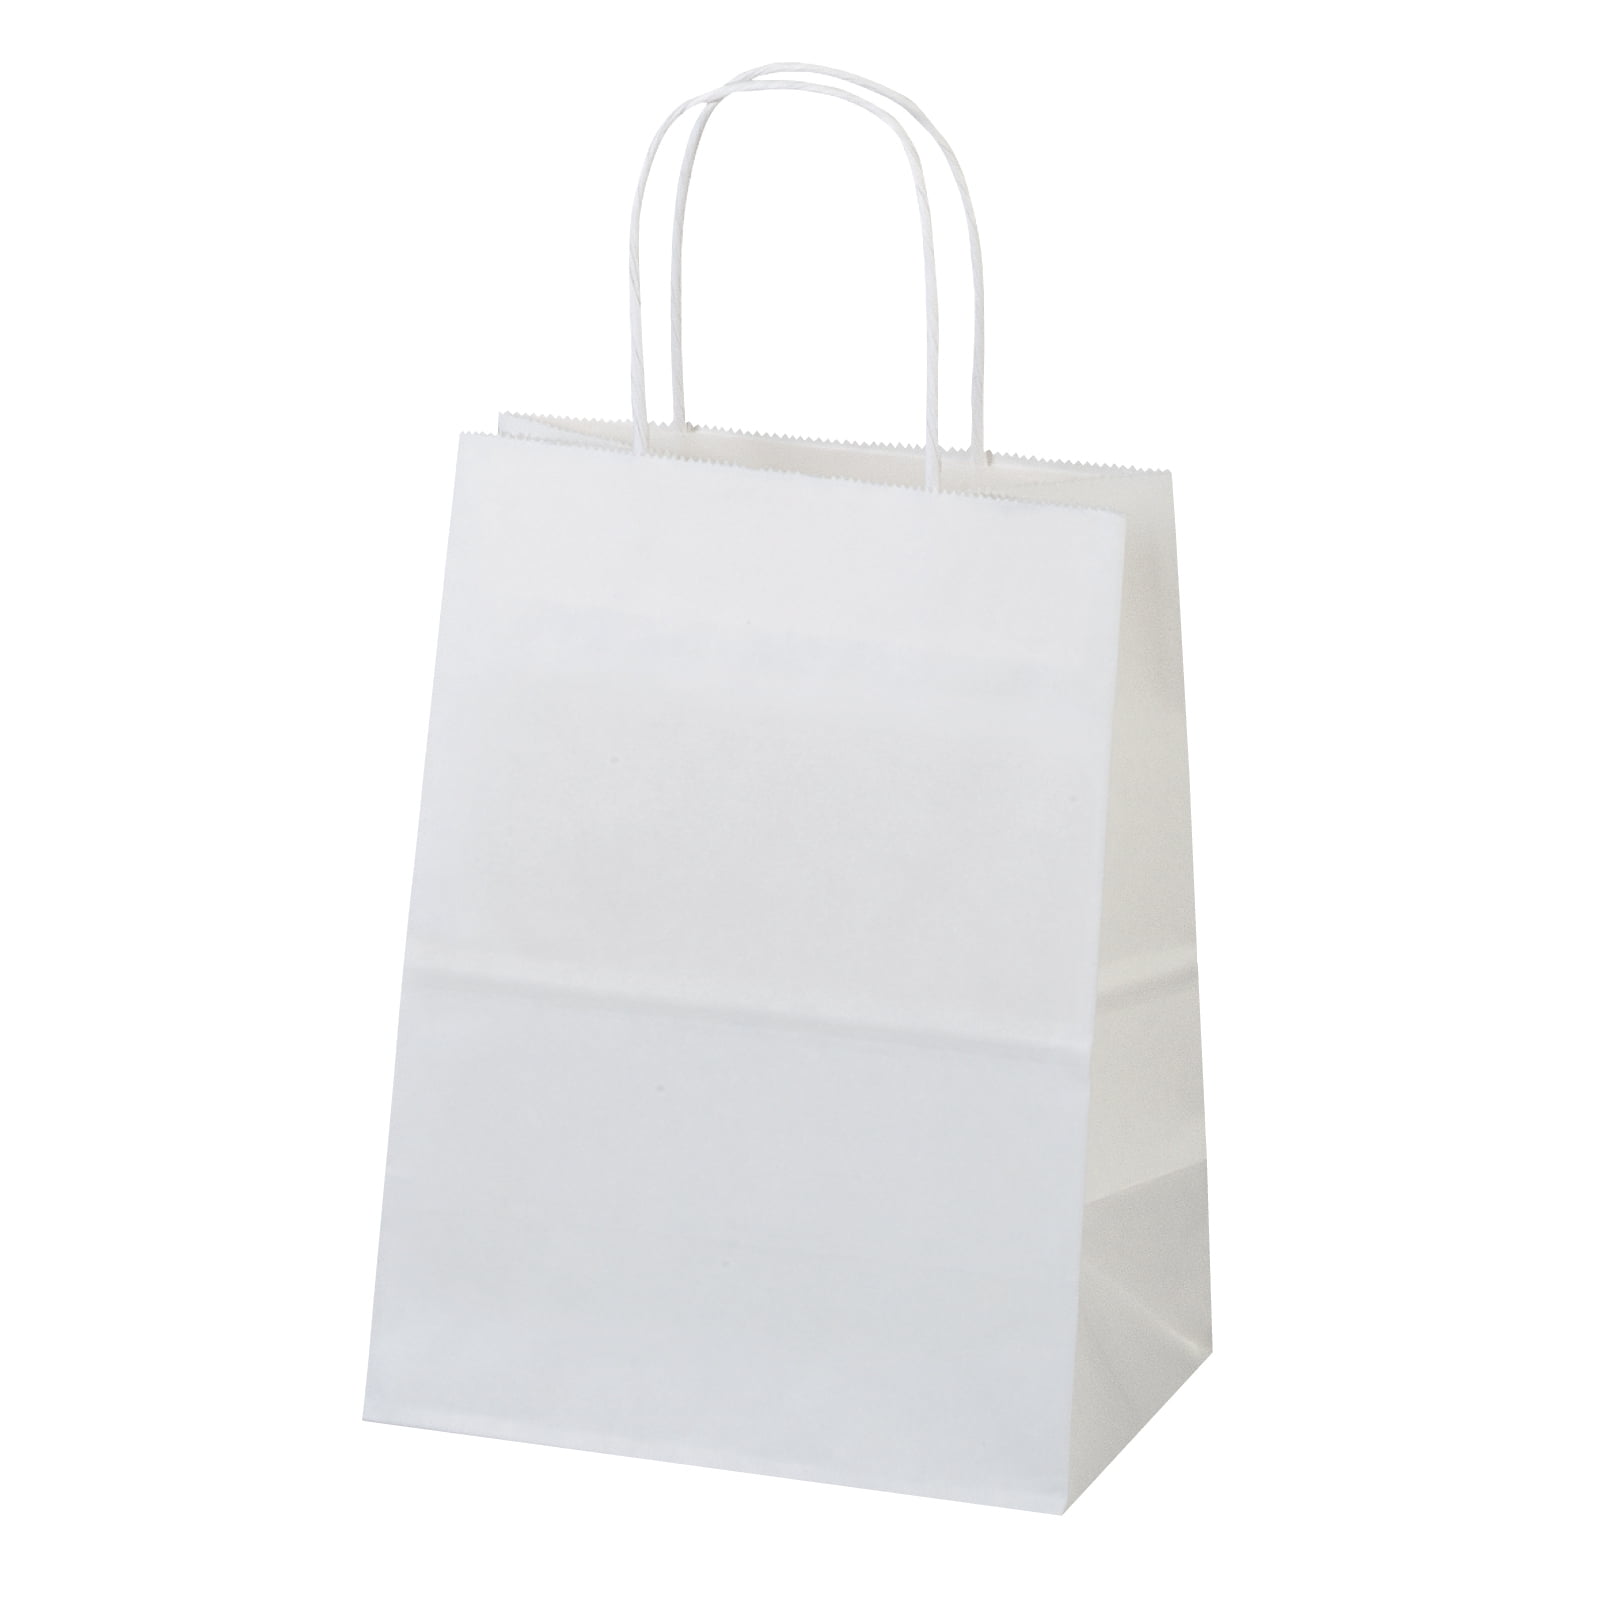 24 x Paper Craft Gift Bags White 33x25x12cm 100% Brand New 